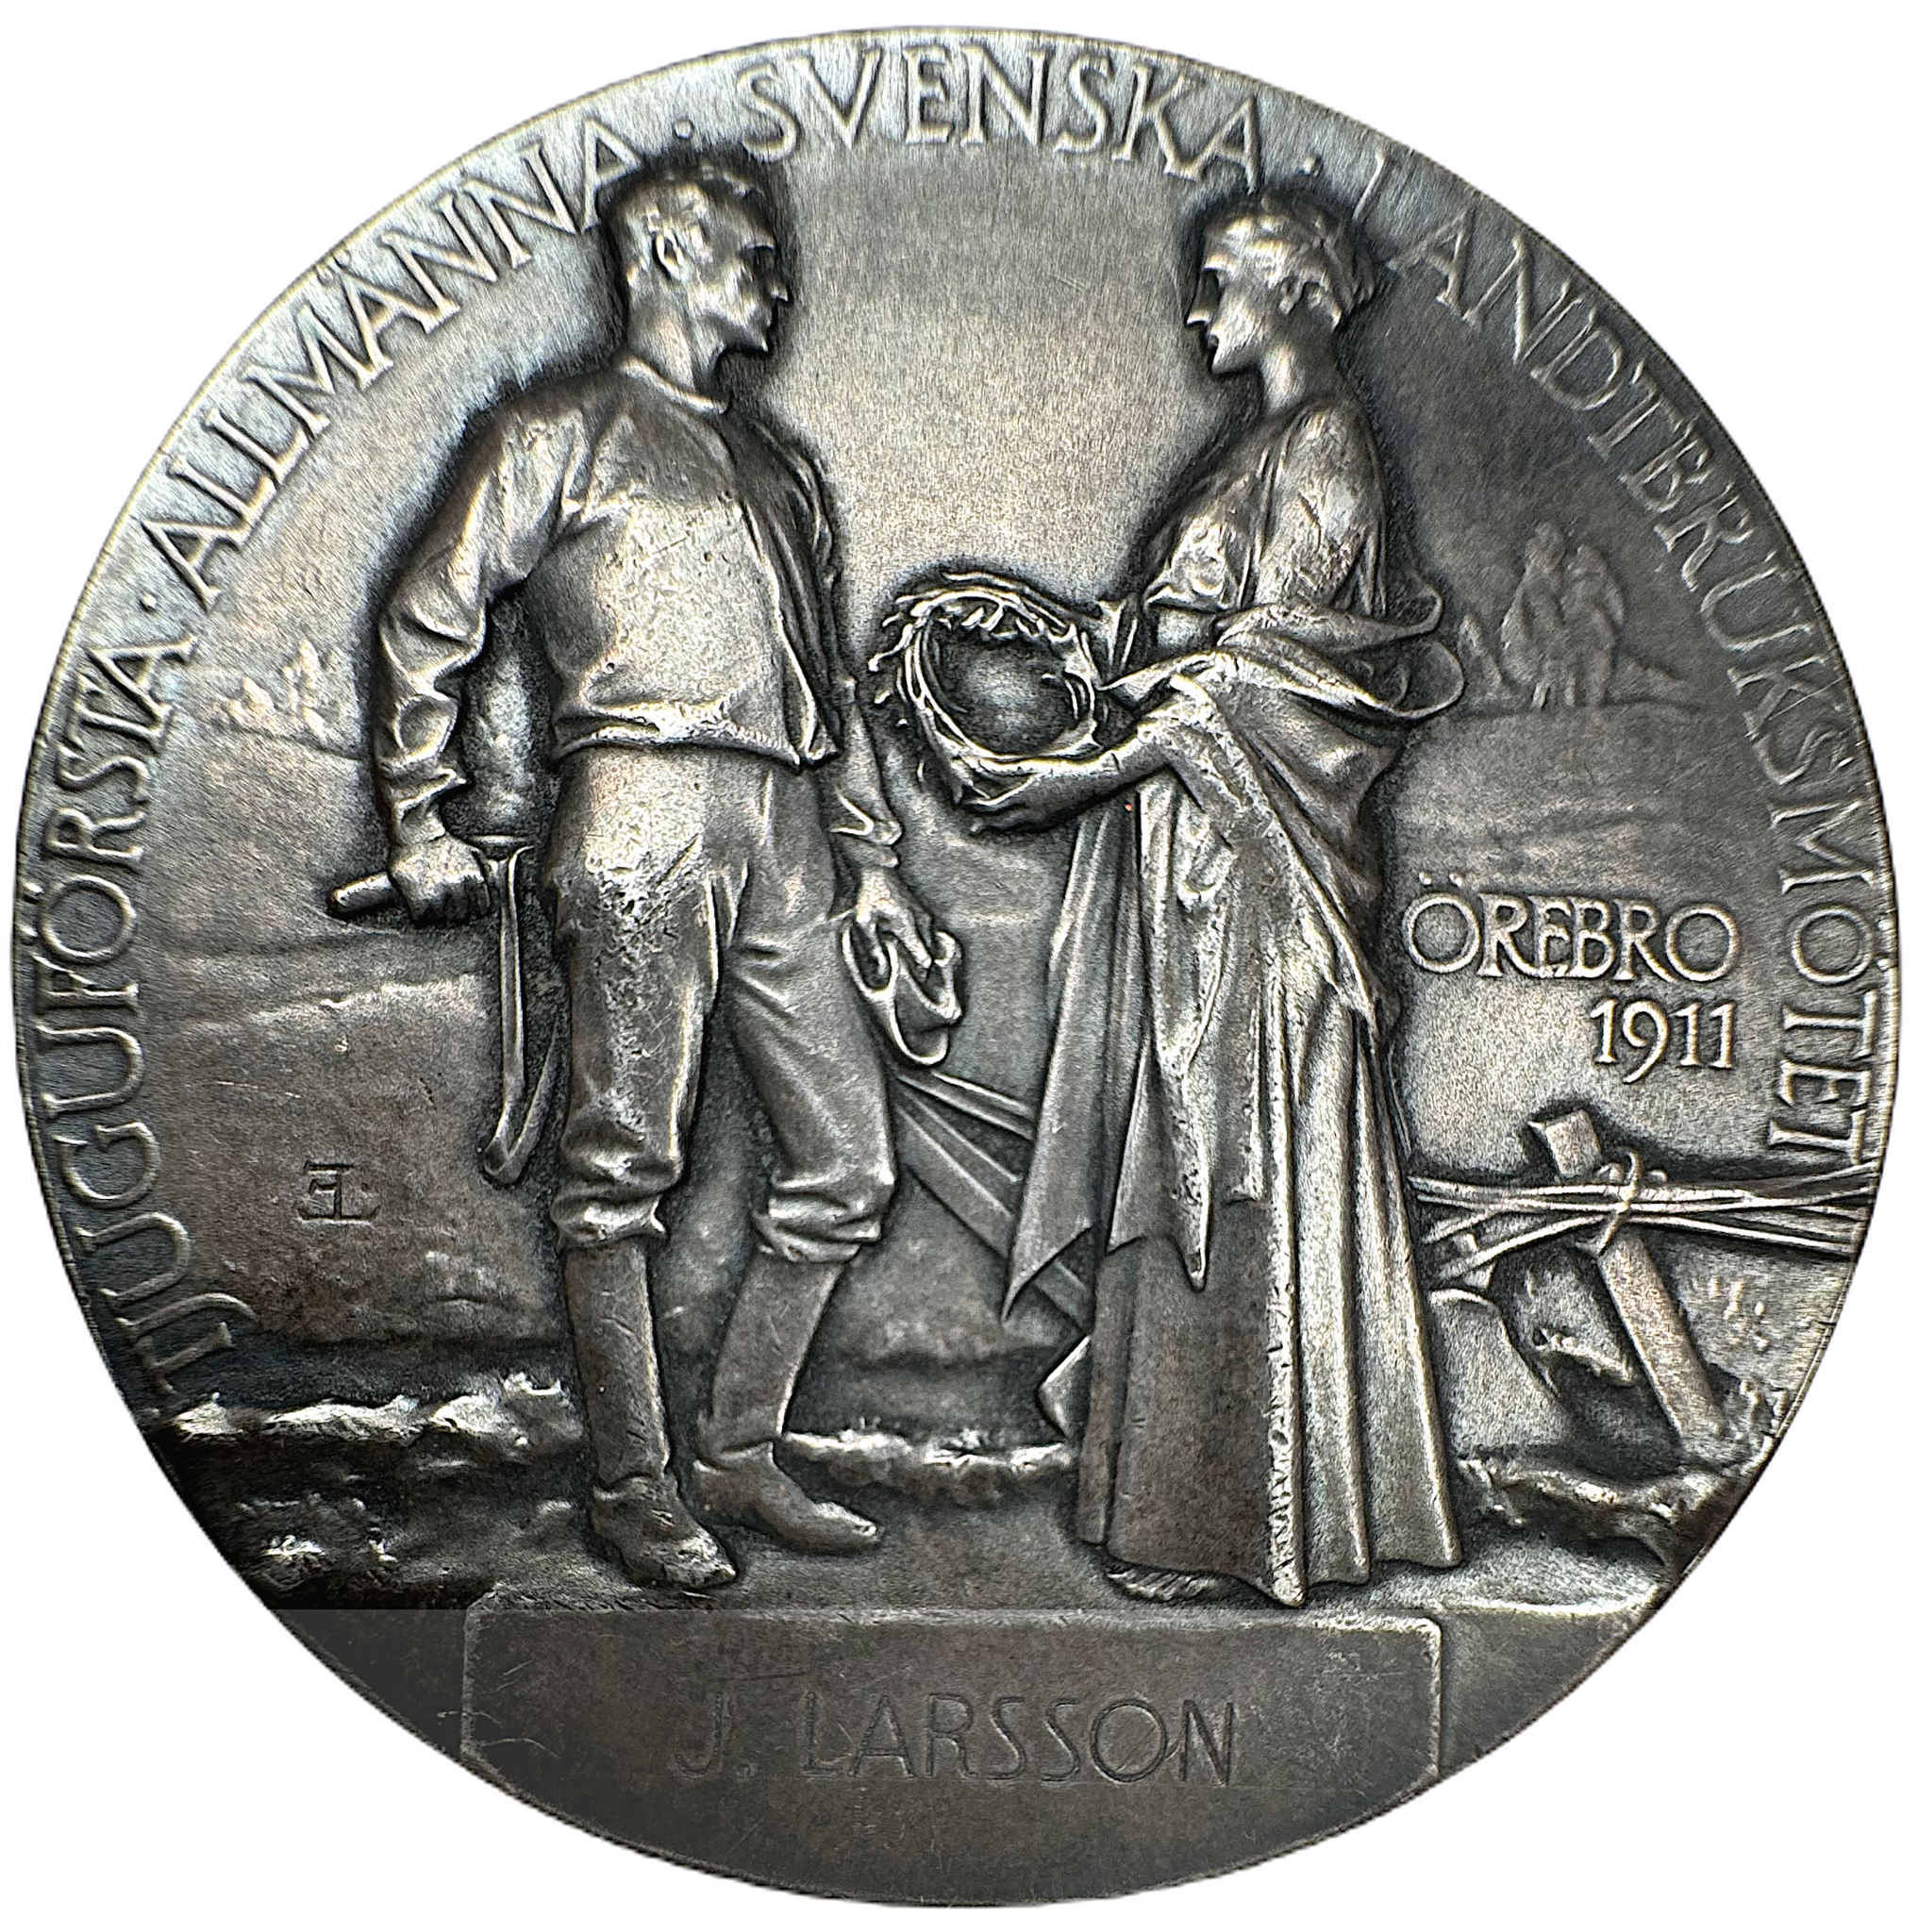 Gustav V - Lantbruksmötets i Örebro 1911 av Erik Lindberg - Stora prismedaljen i silver